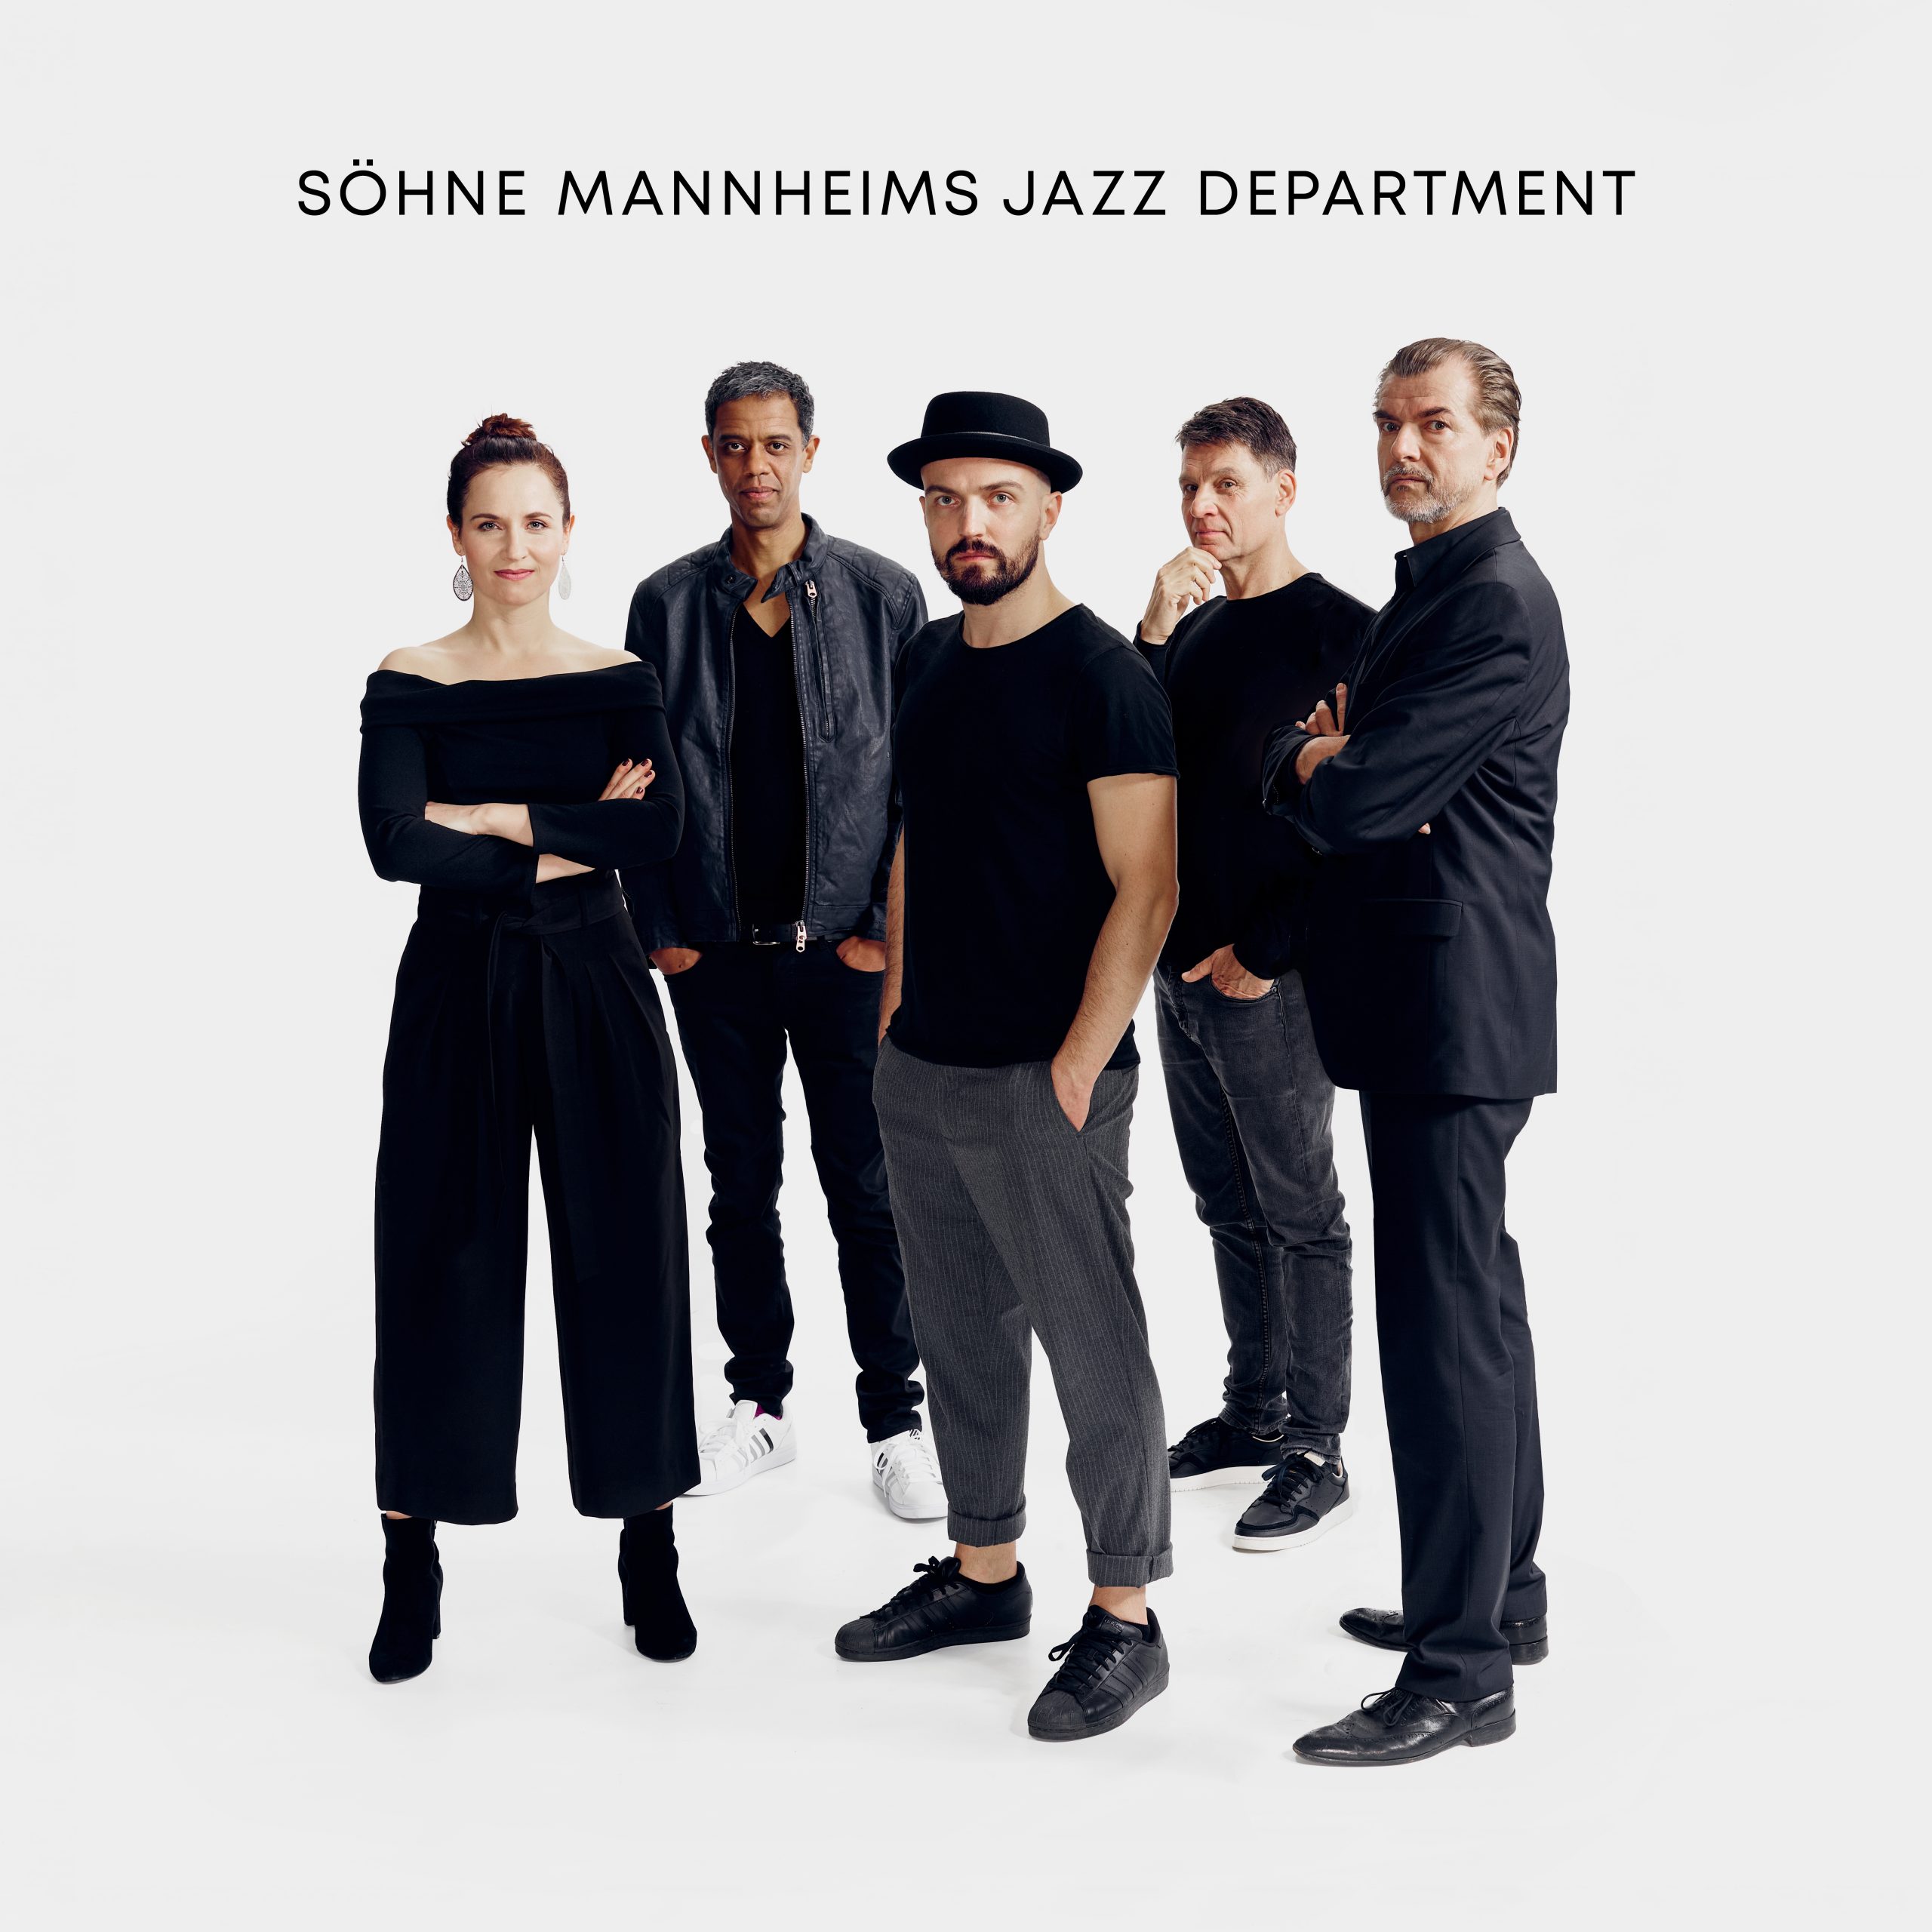 Söhne mannheims tour dates